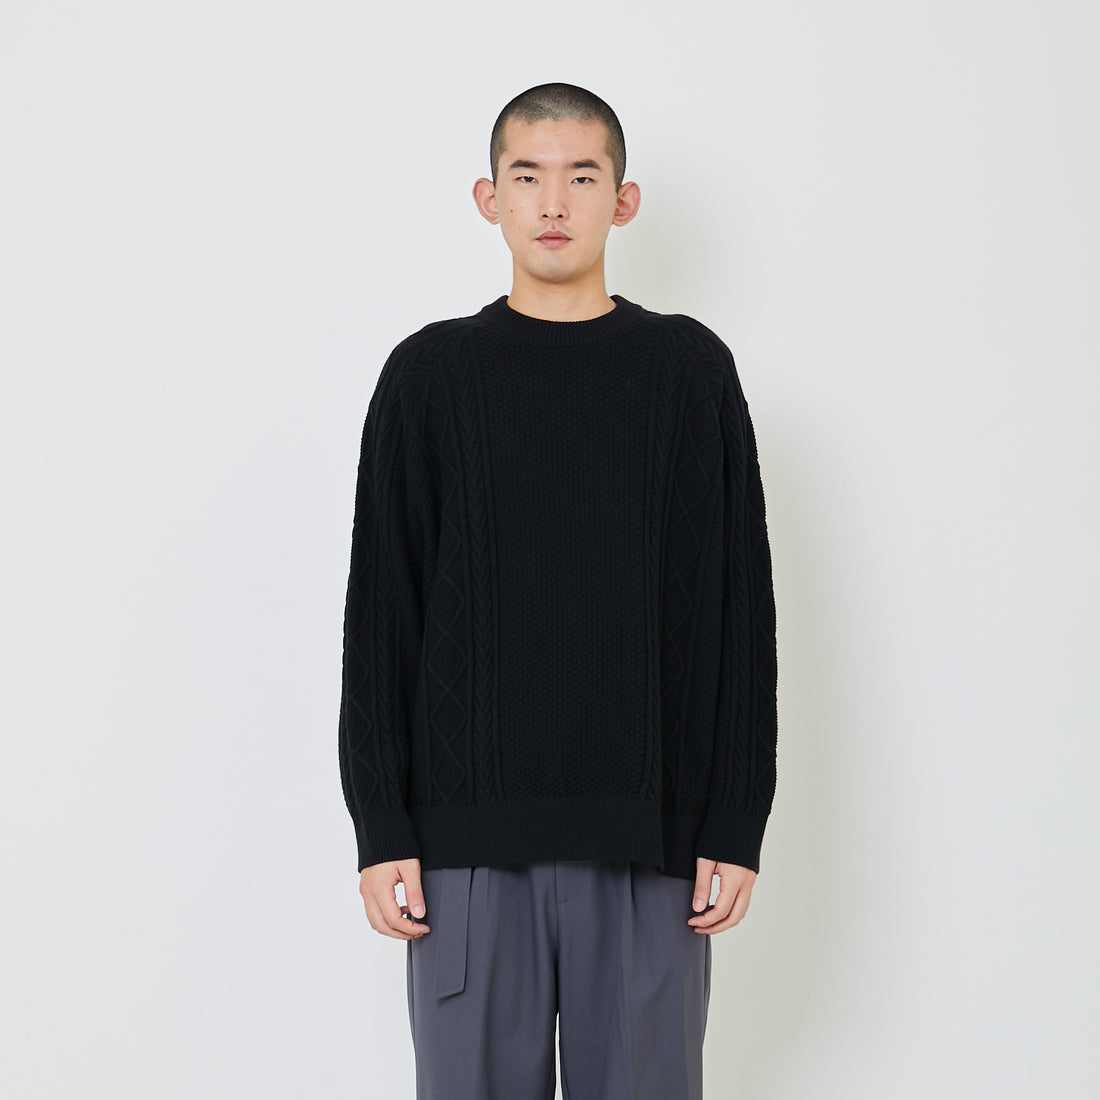 Men Oversized Cable Knit Sweater - Black - SM2405091B